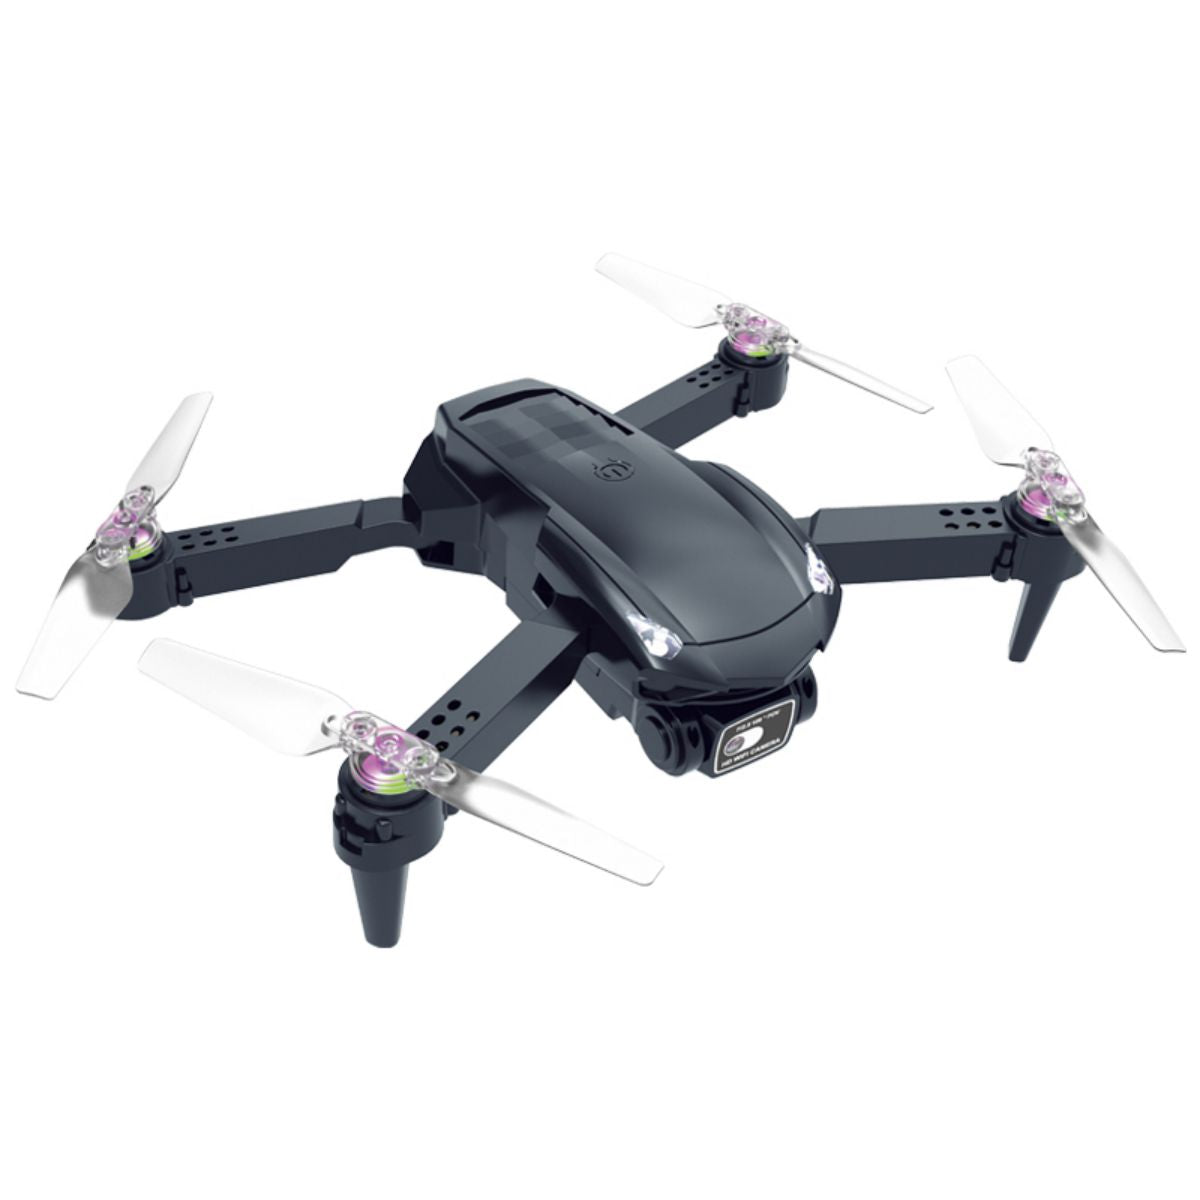 U1 Folding 4K Aerial Drone - Hugmie